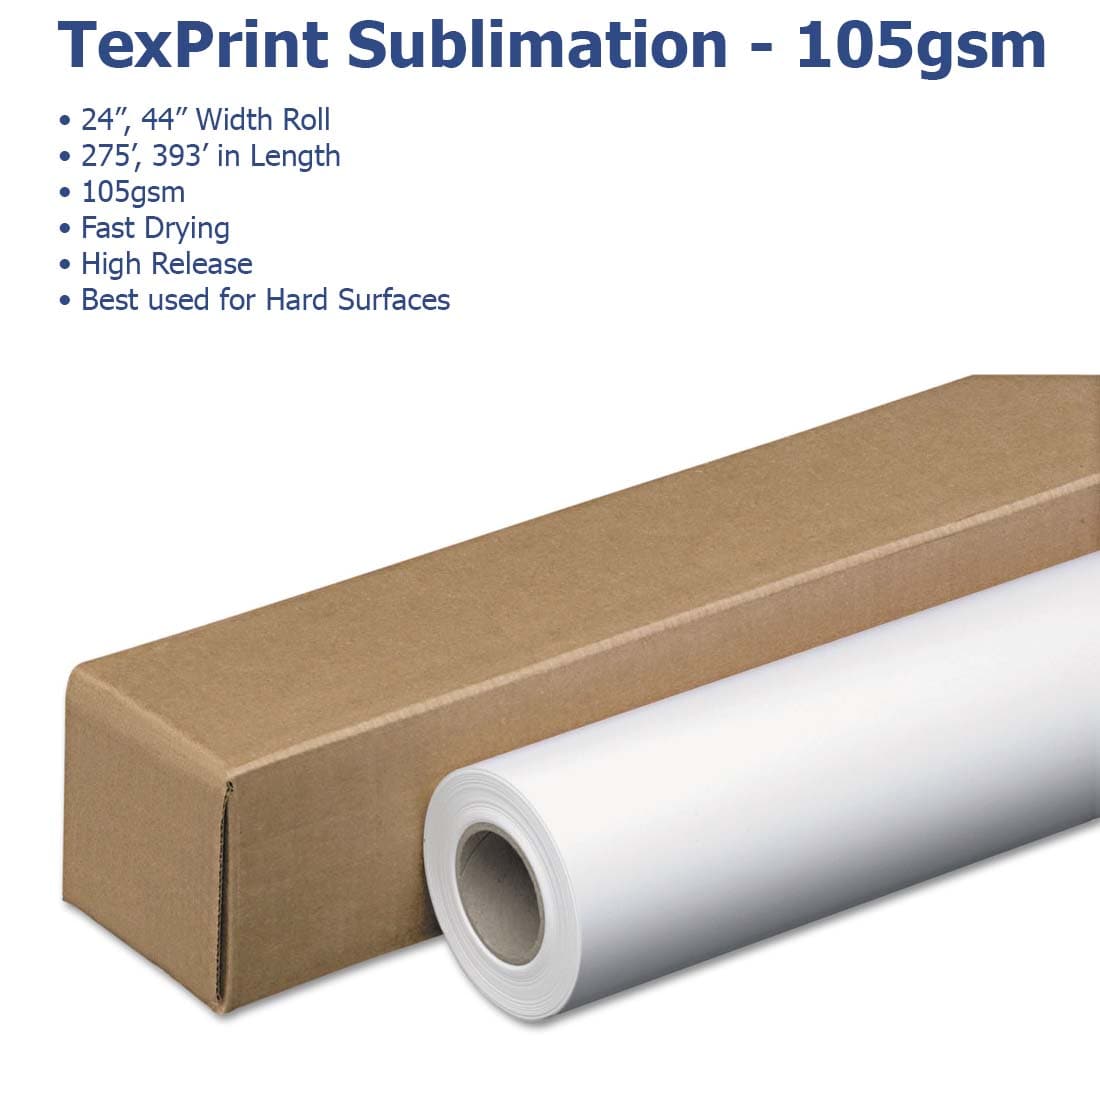 TexPrint XP - Thermo Tack - Joto Imaging Supplies US